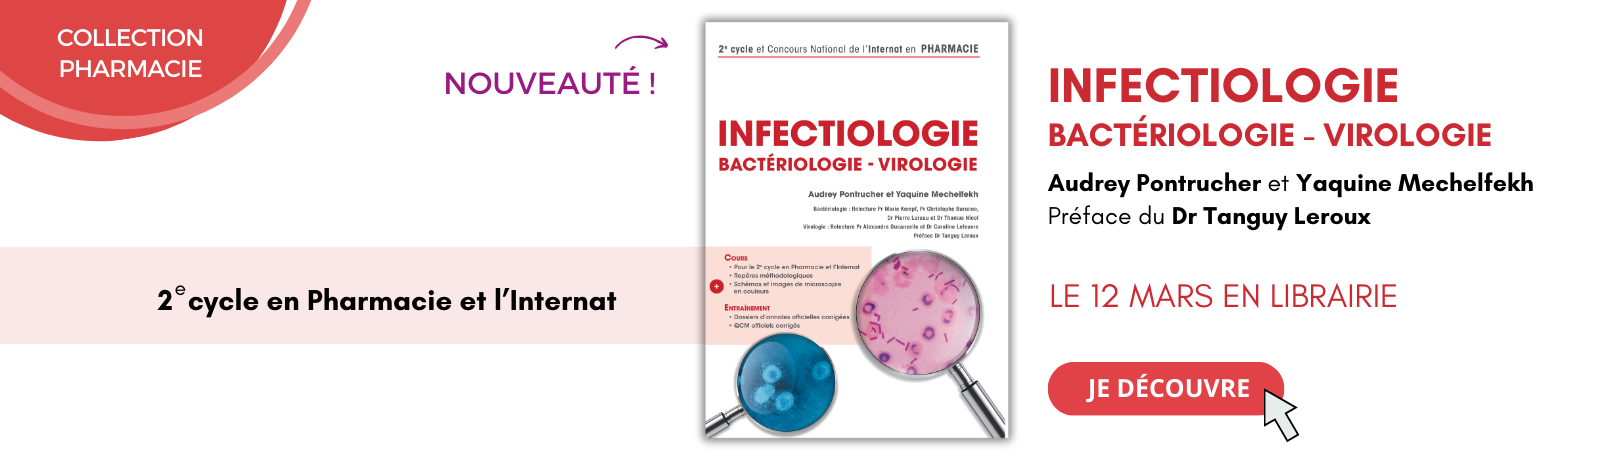 Infectiologie - pharma(2)